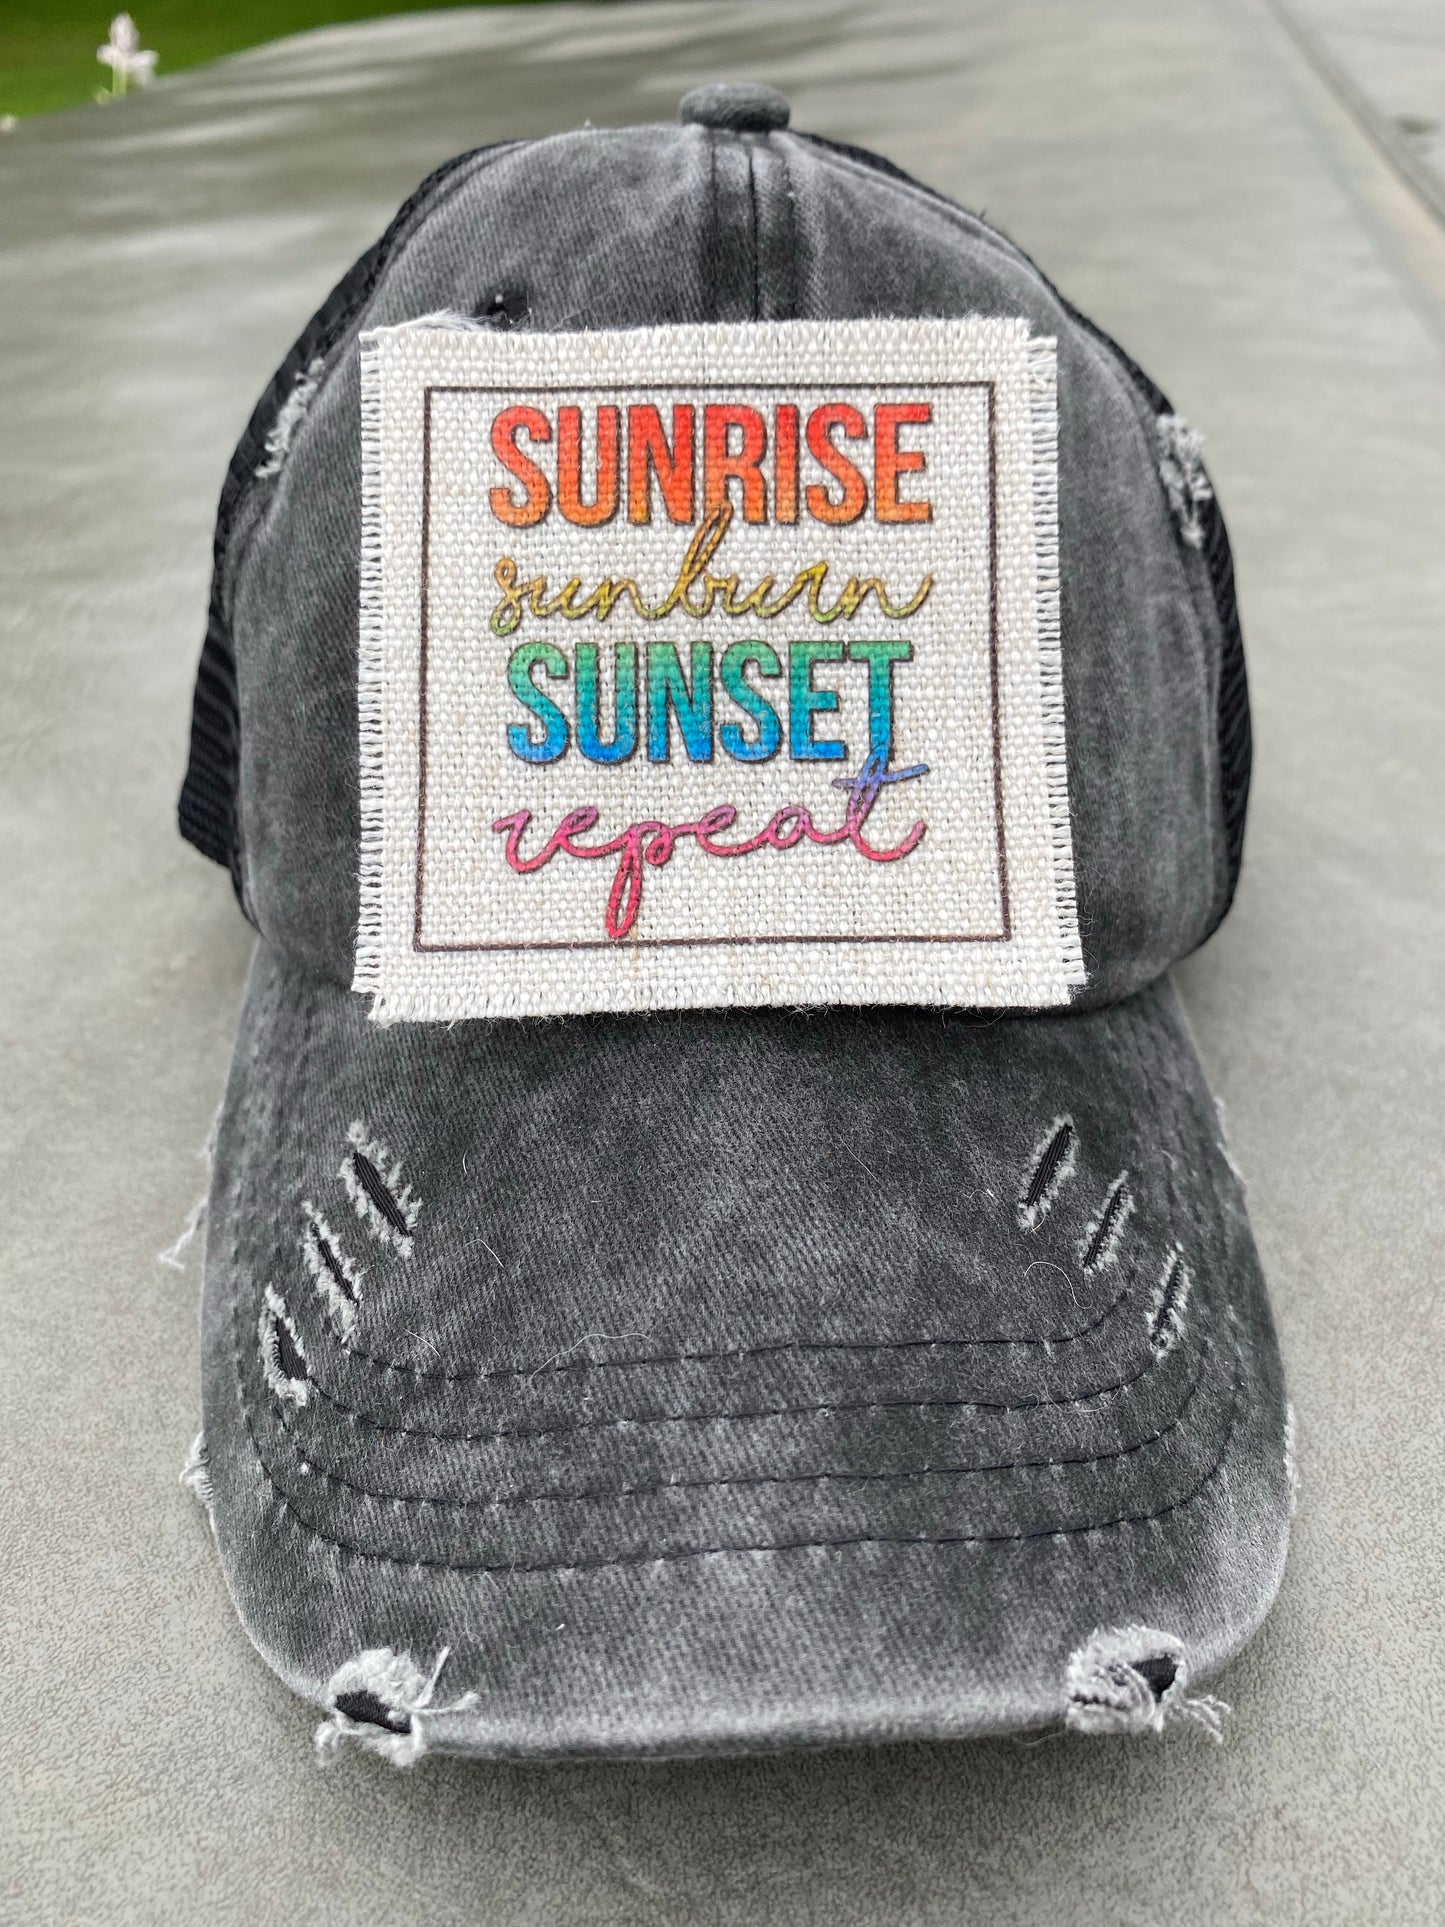 Sunrise Sunburn Sunset Repeat Rainbow Hat Patch